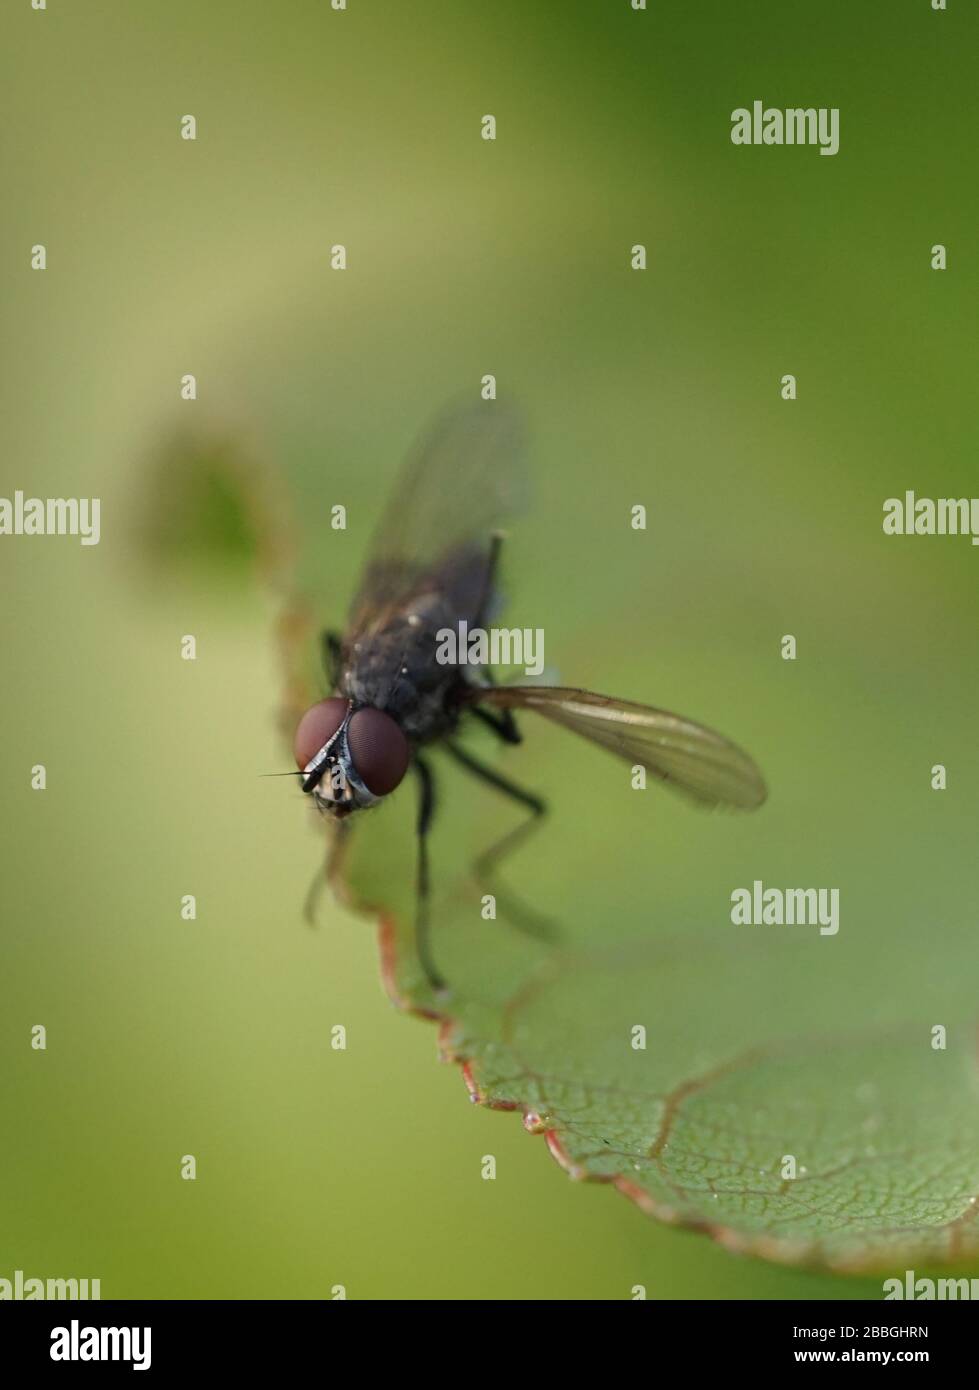 Close-up of fly on leaf Banque D'Images